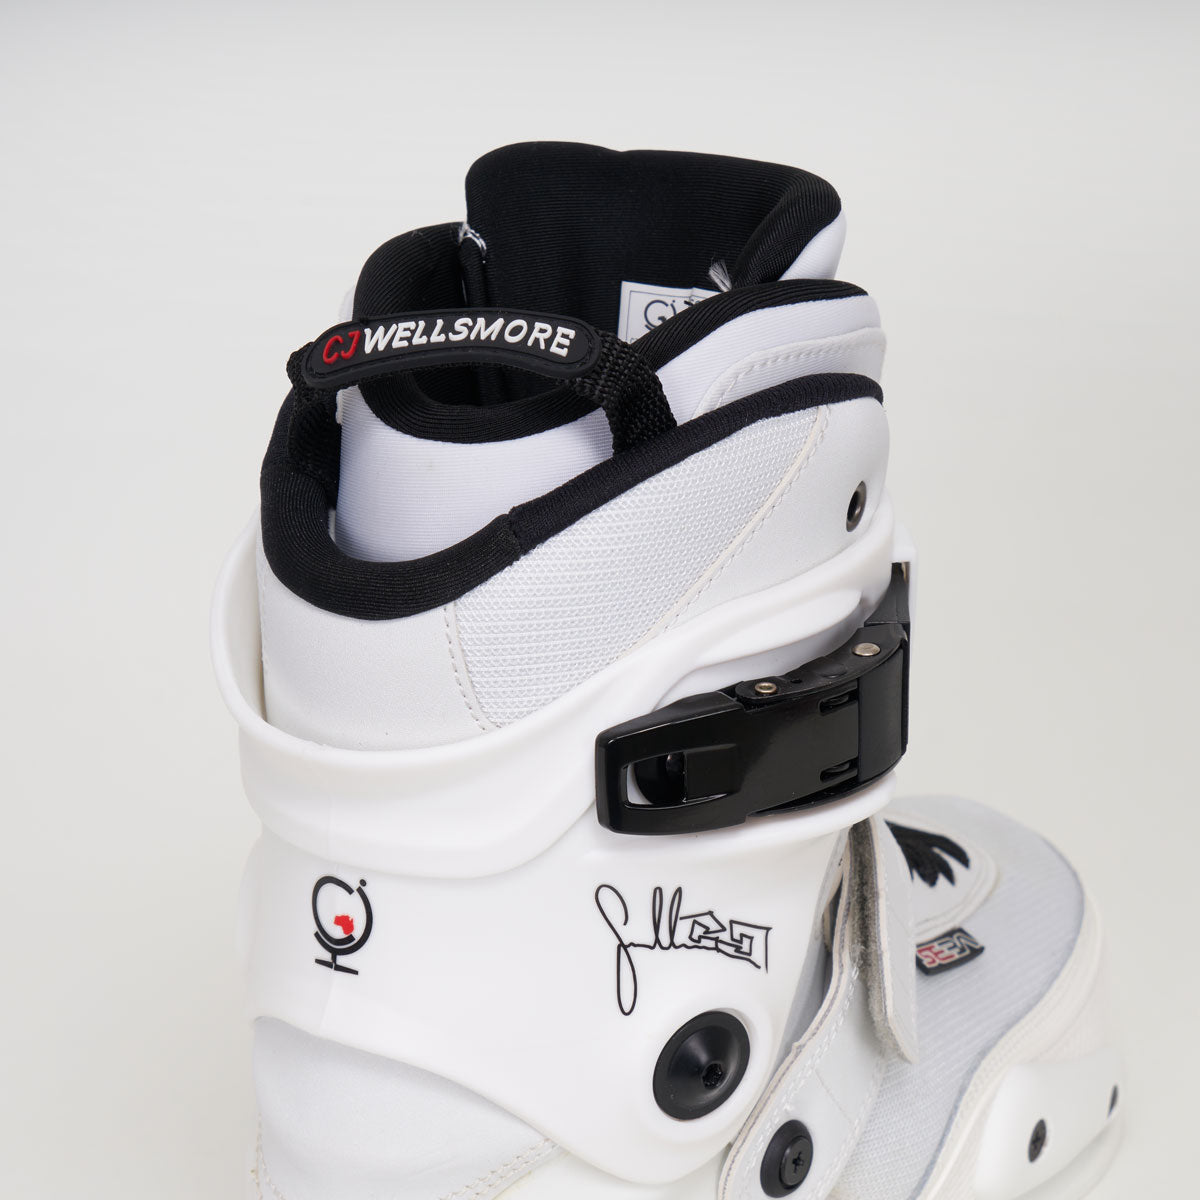 Seba CJ2 Prime White Skates (Plastic version with removable liner) - Boot Only